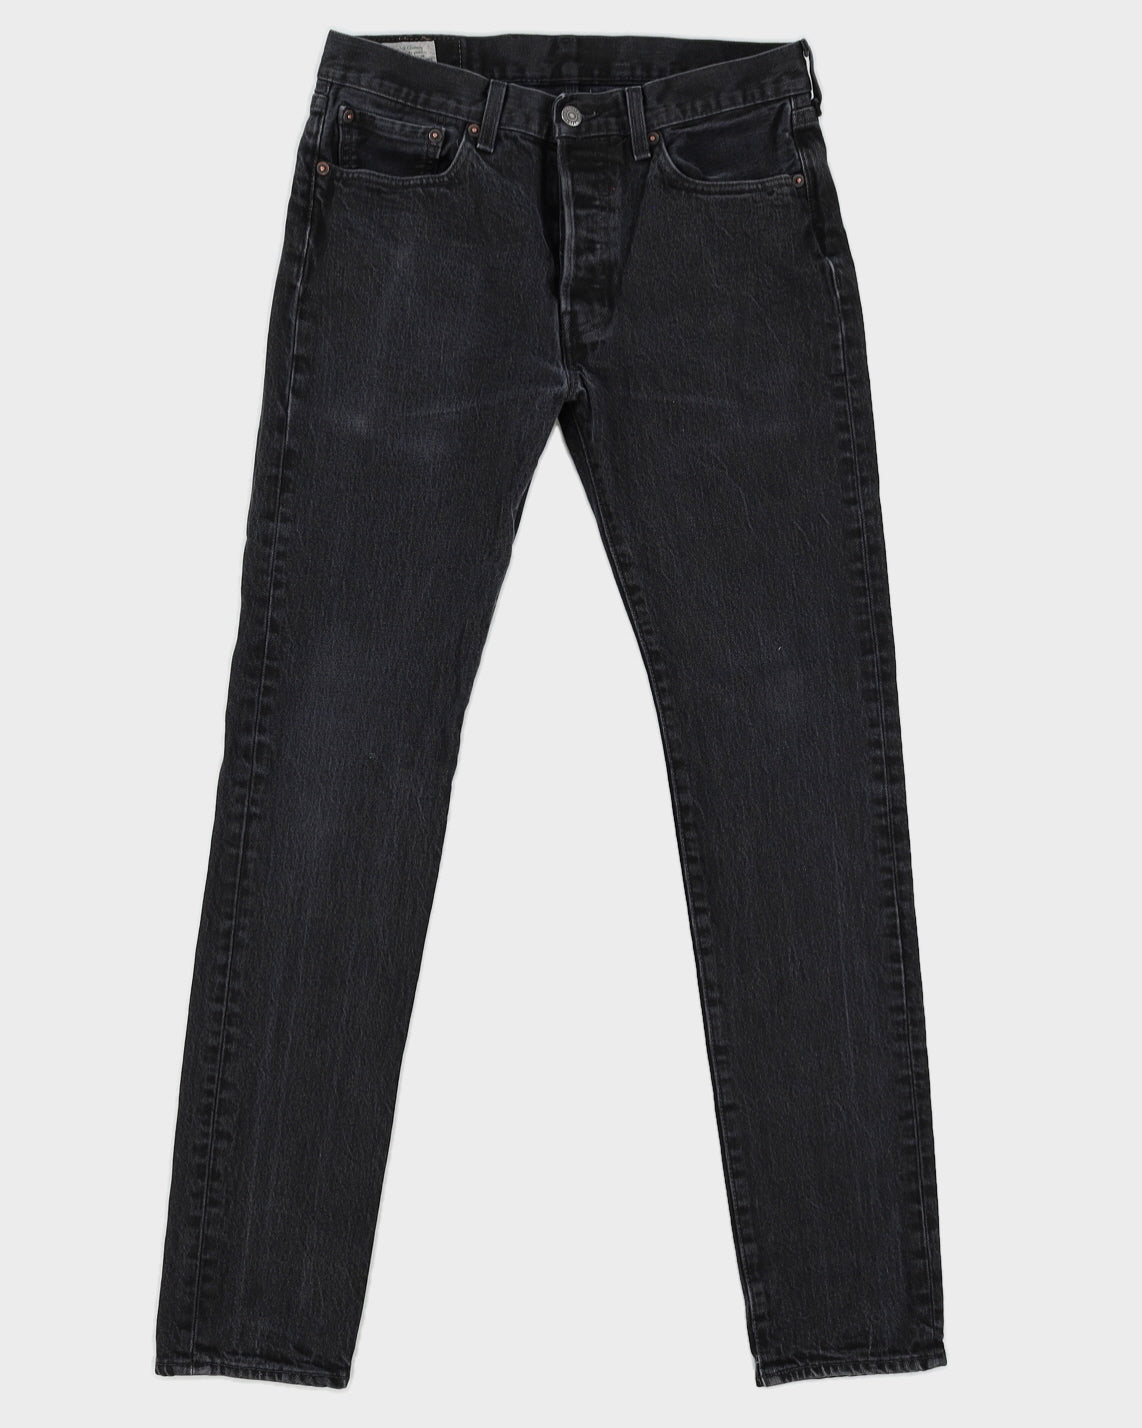 Levi's Washed Black Denim 501 Jeans - W32 L34